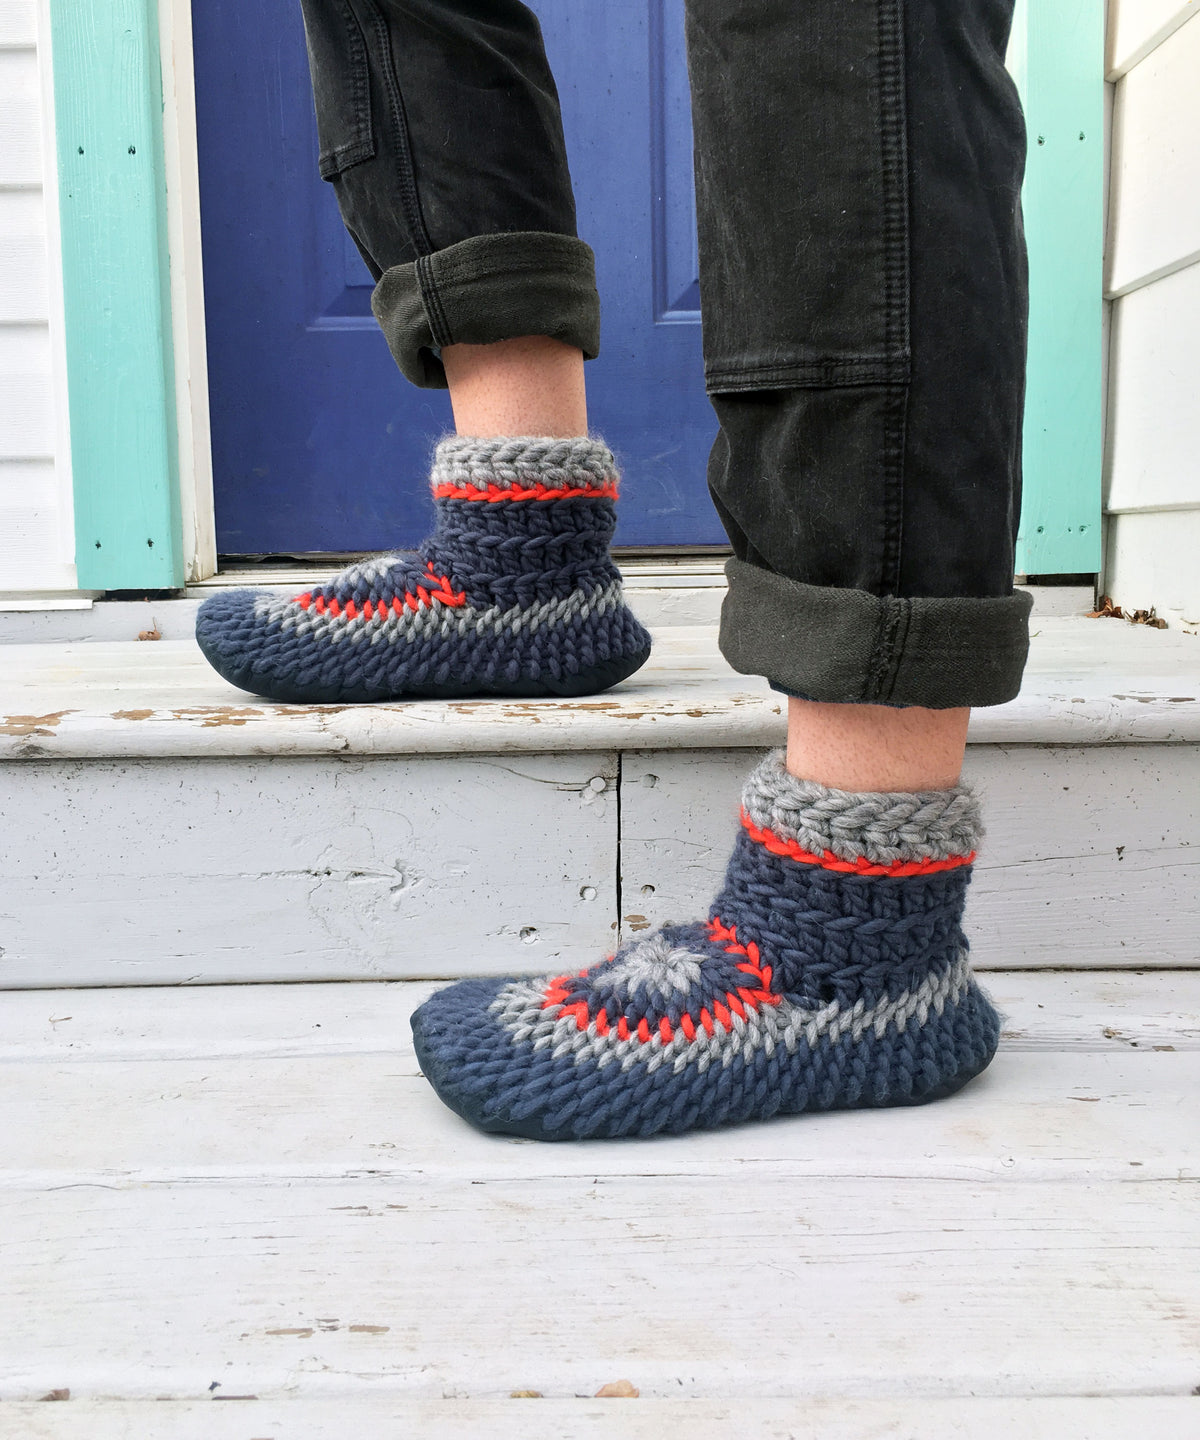 Demi-Boot: Sock Monkey, Merino Wool Work Sock Slipper with Leather Sole